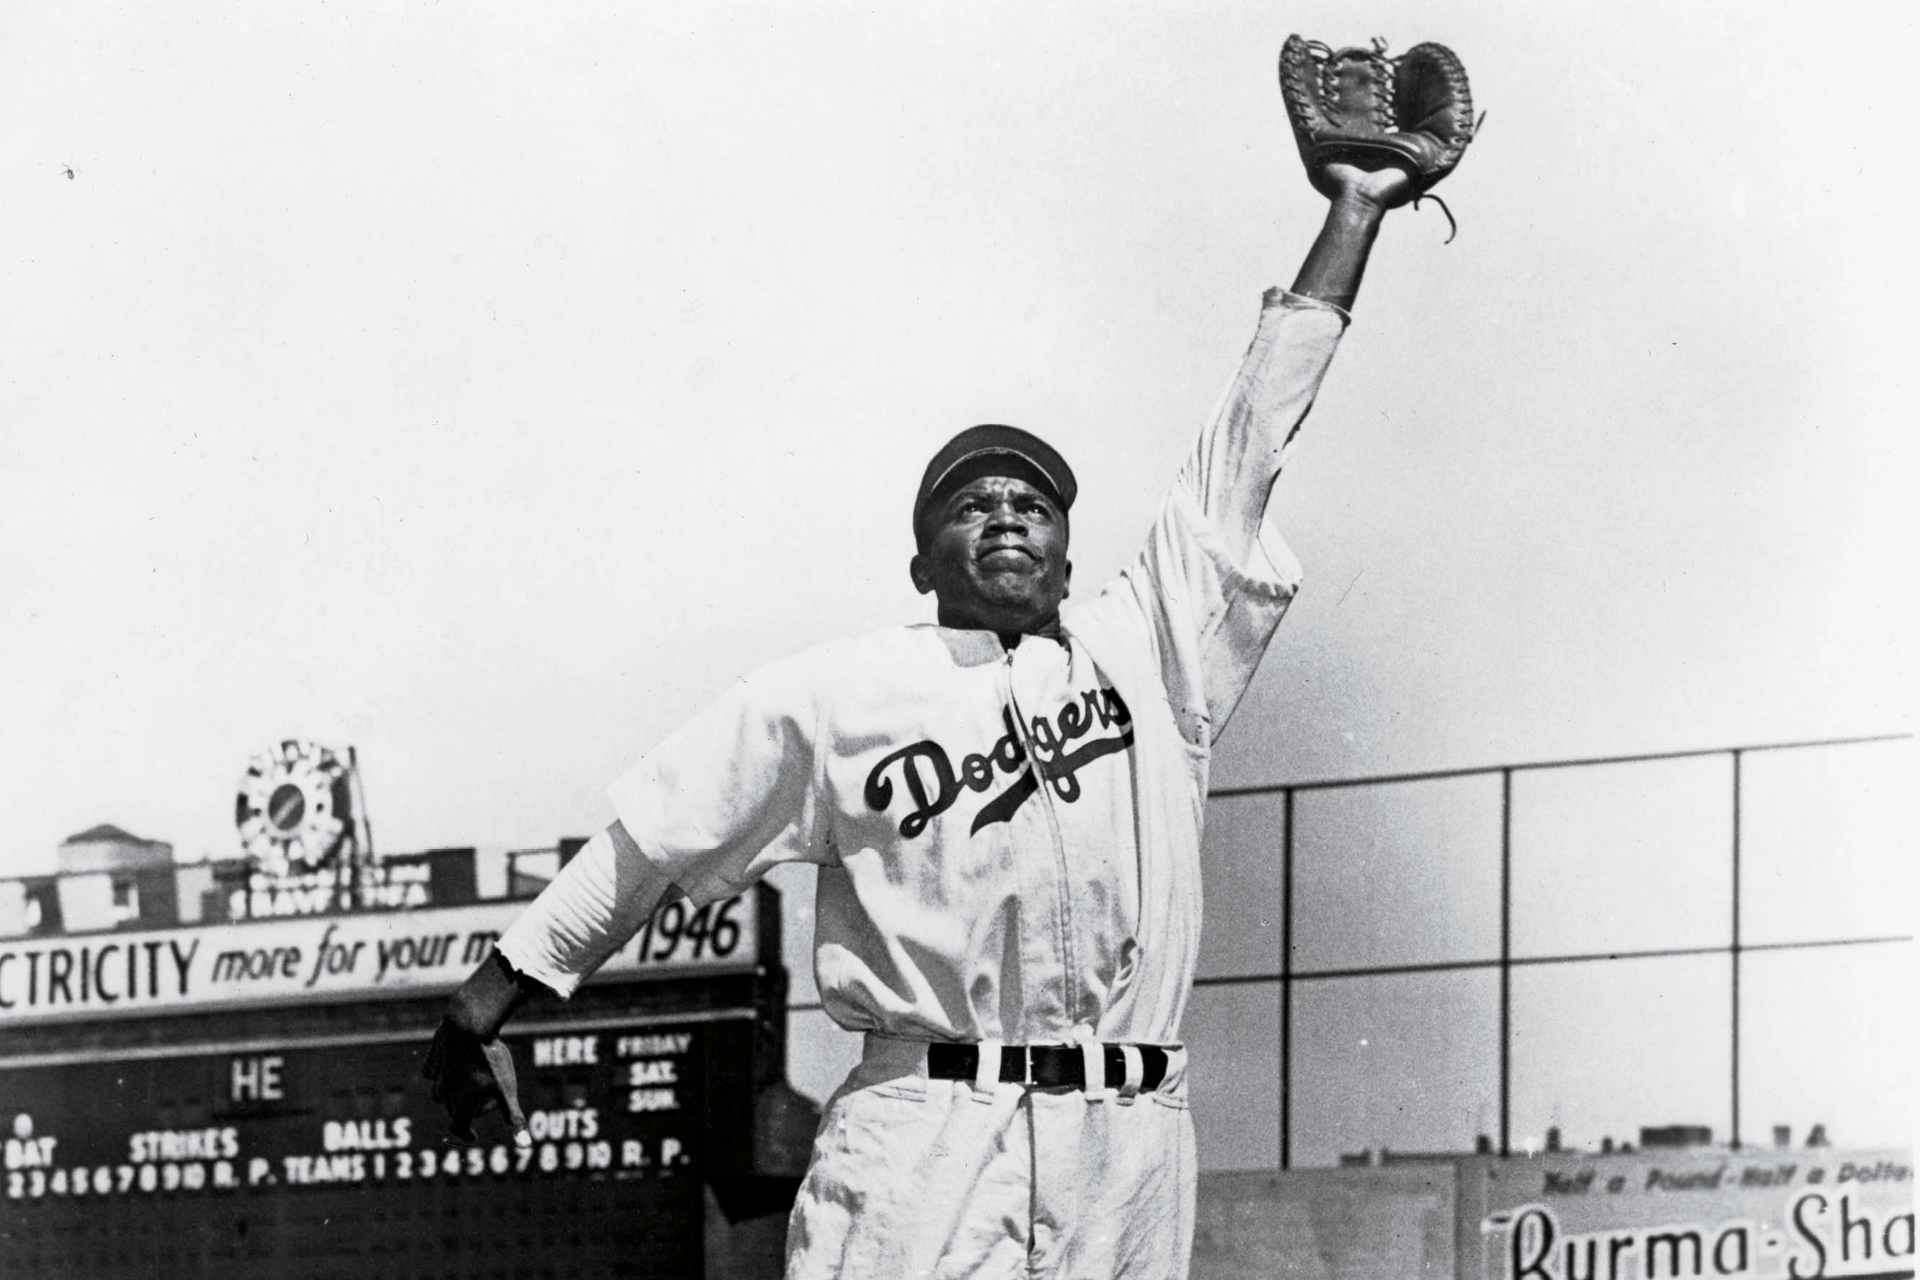 Jackie Robinson 1948 Brooklyn Dodgers Road Jersey